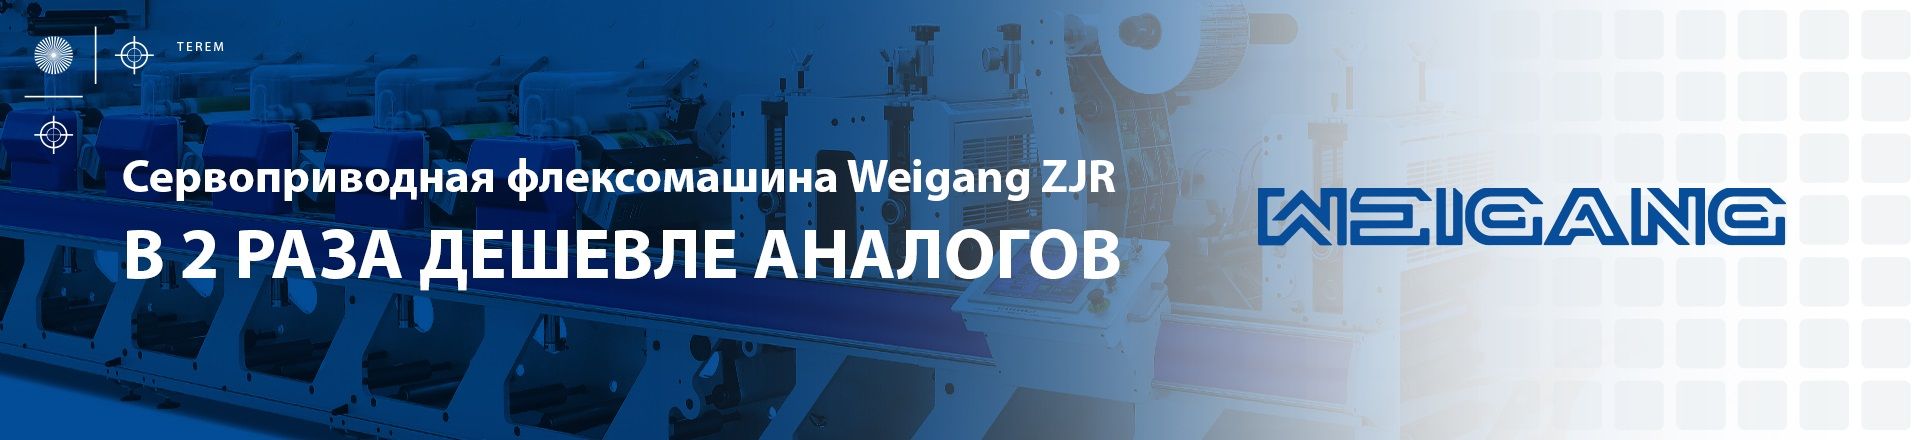 Weigang ZJR: в 2 раза дешевле аналогов (zone 1)